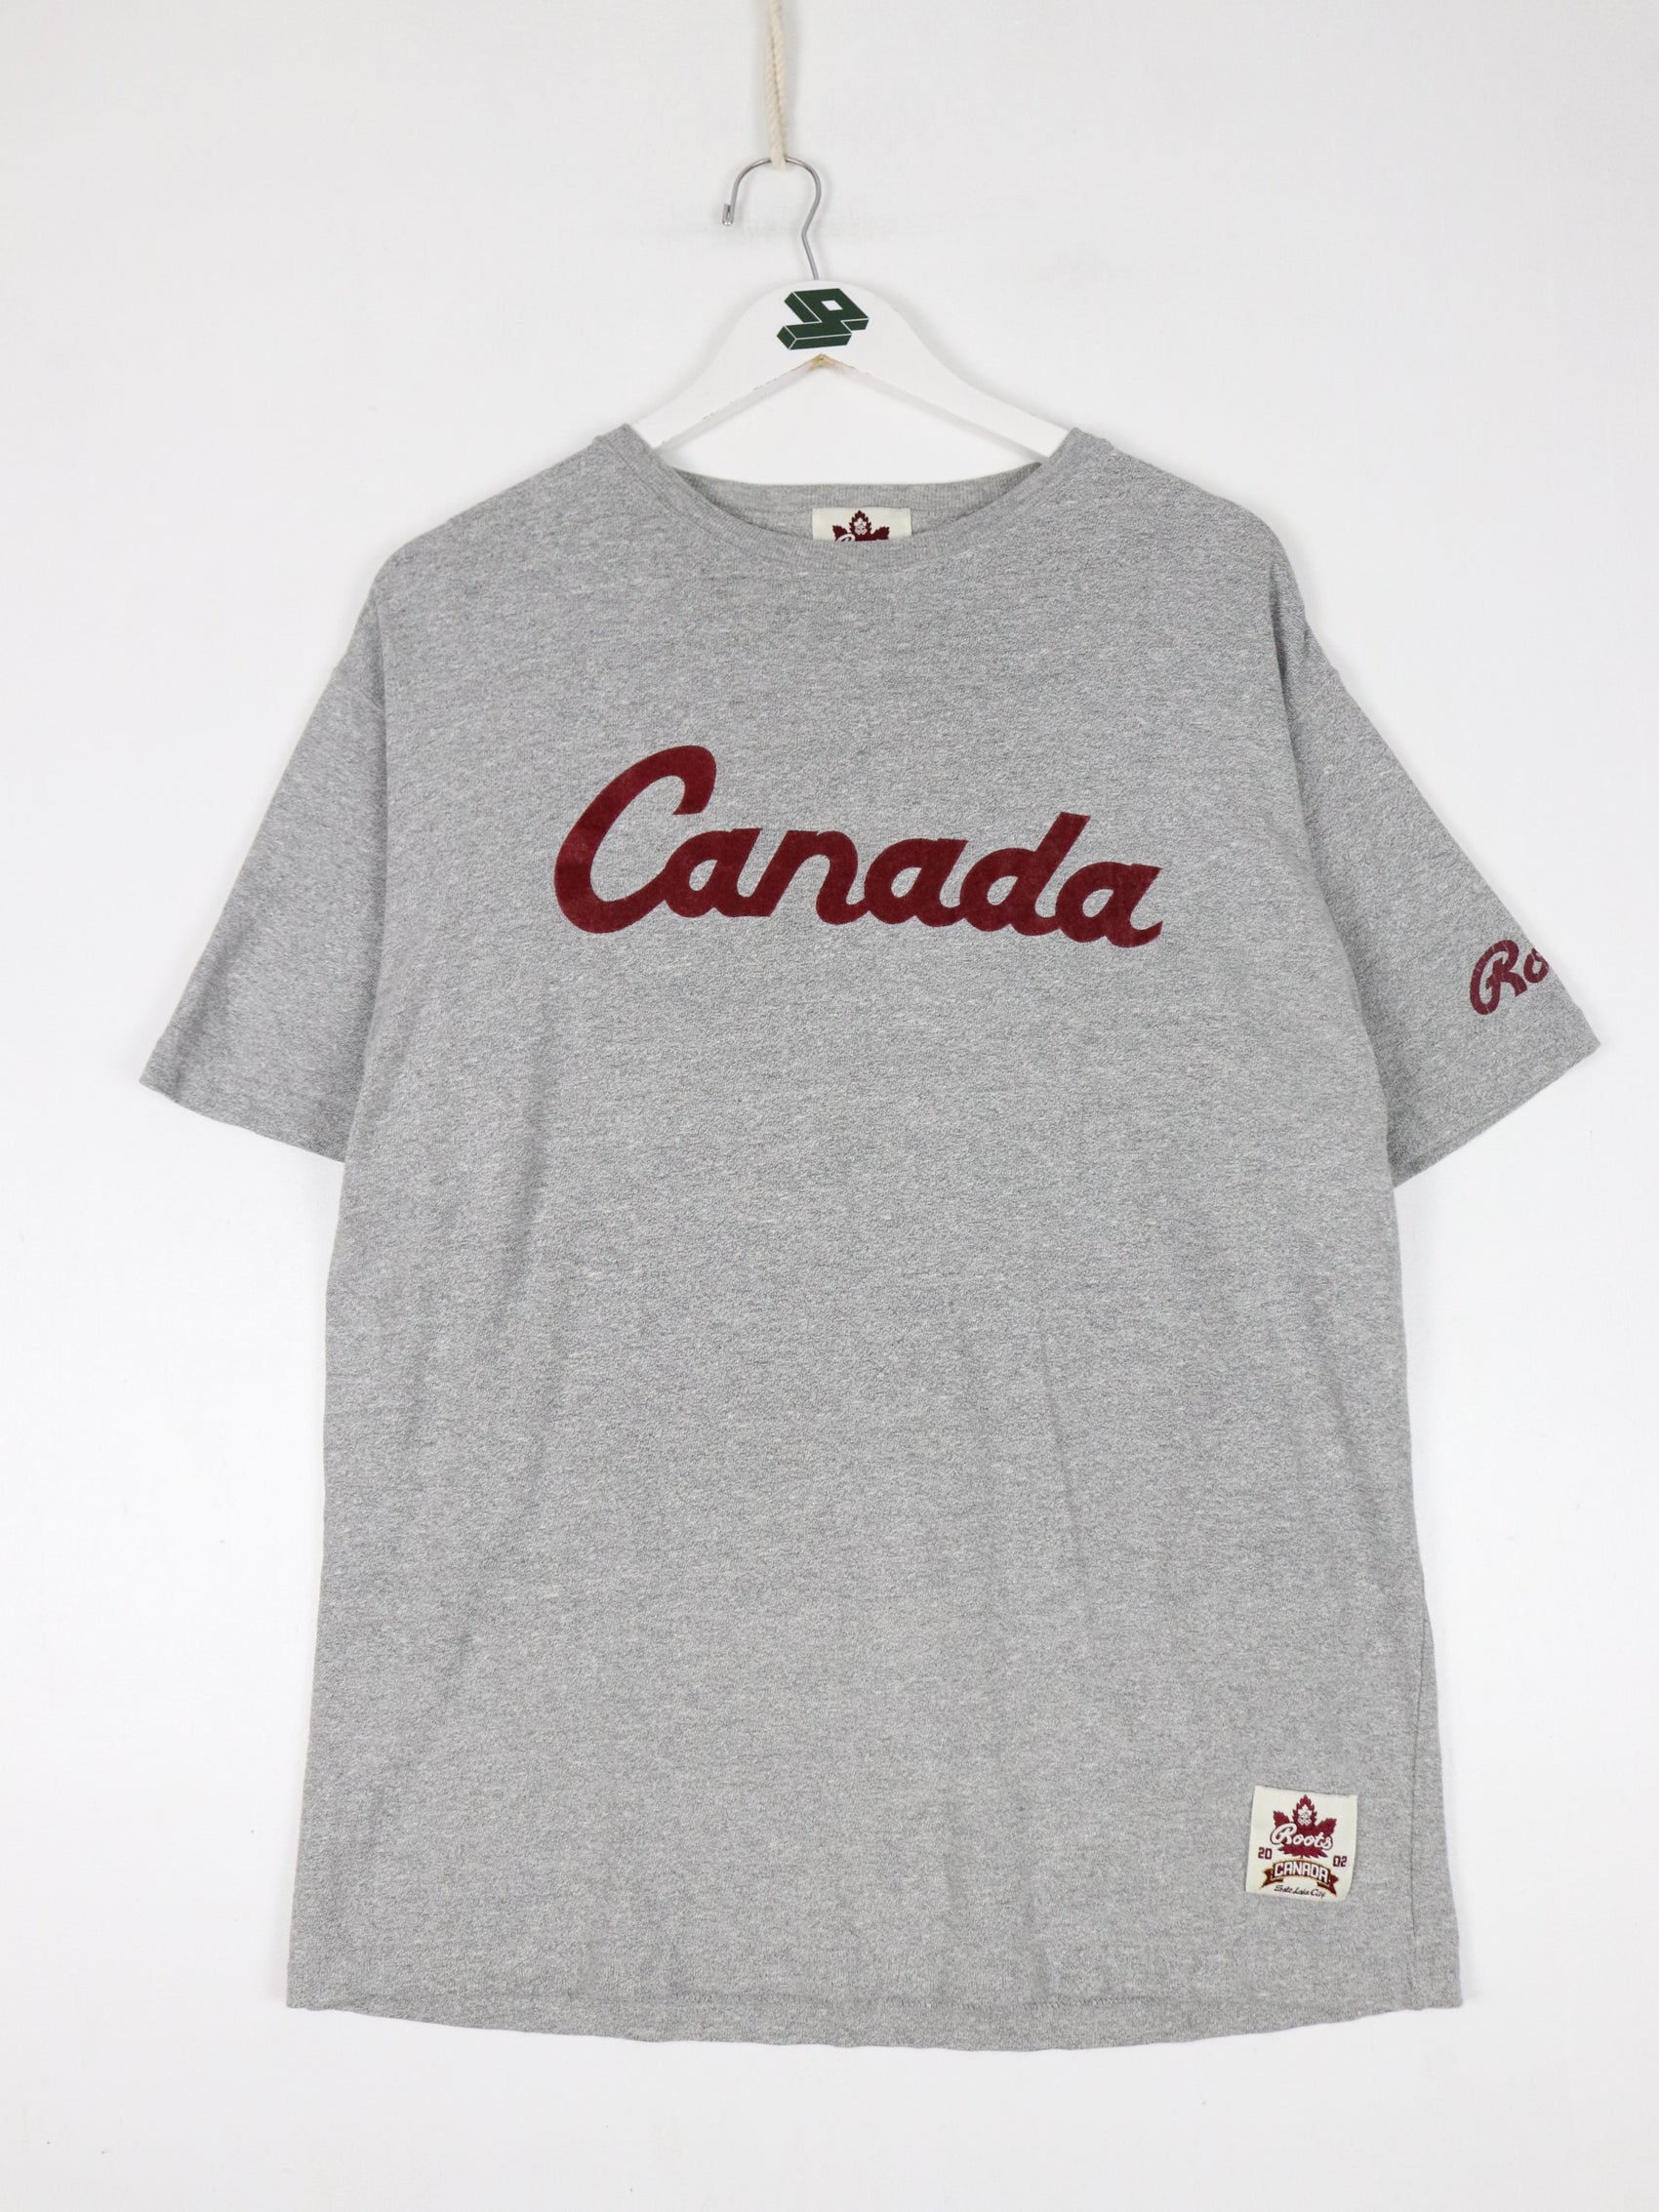 Vintage Roots Canada T Shirt Fits Mens Medium 2002 Salt Lake City Olympics